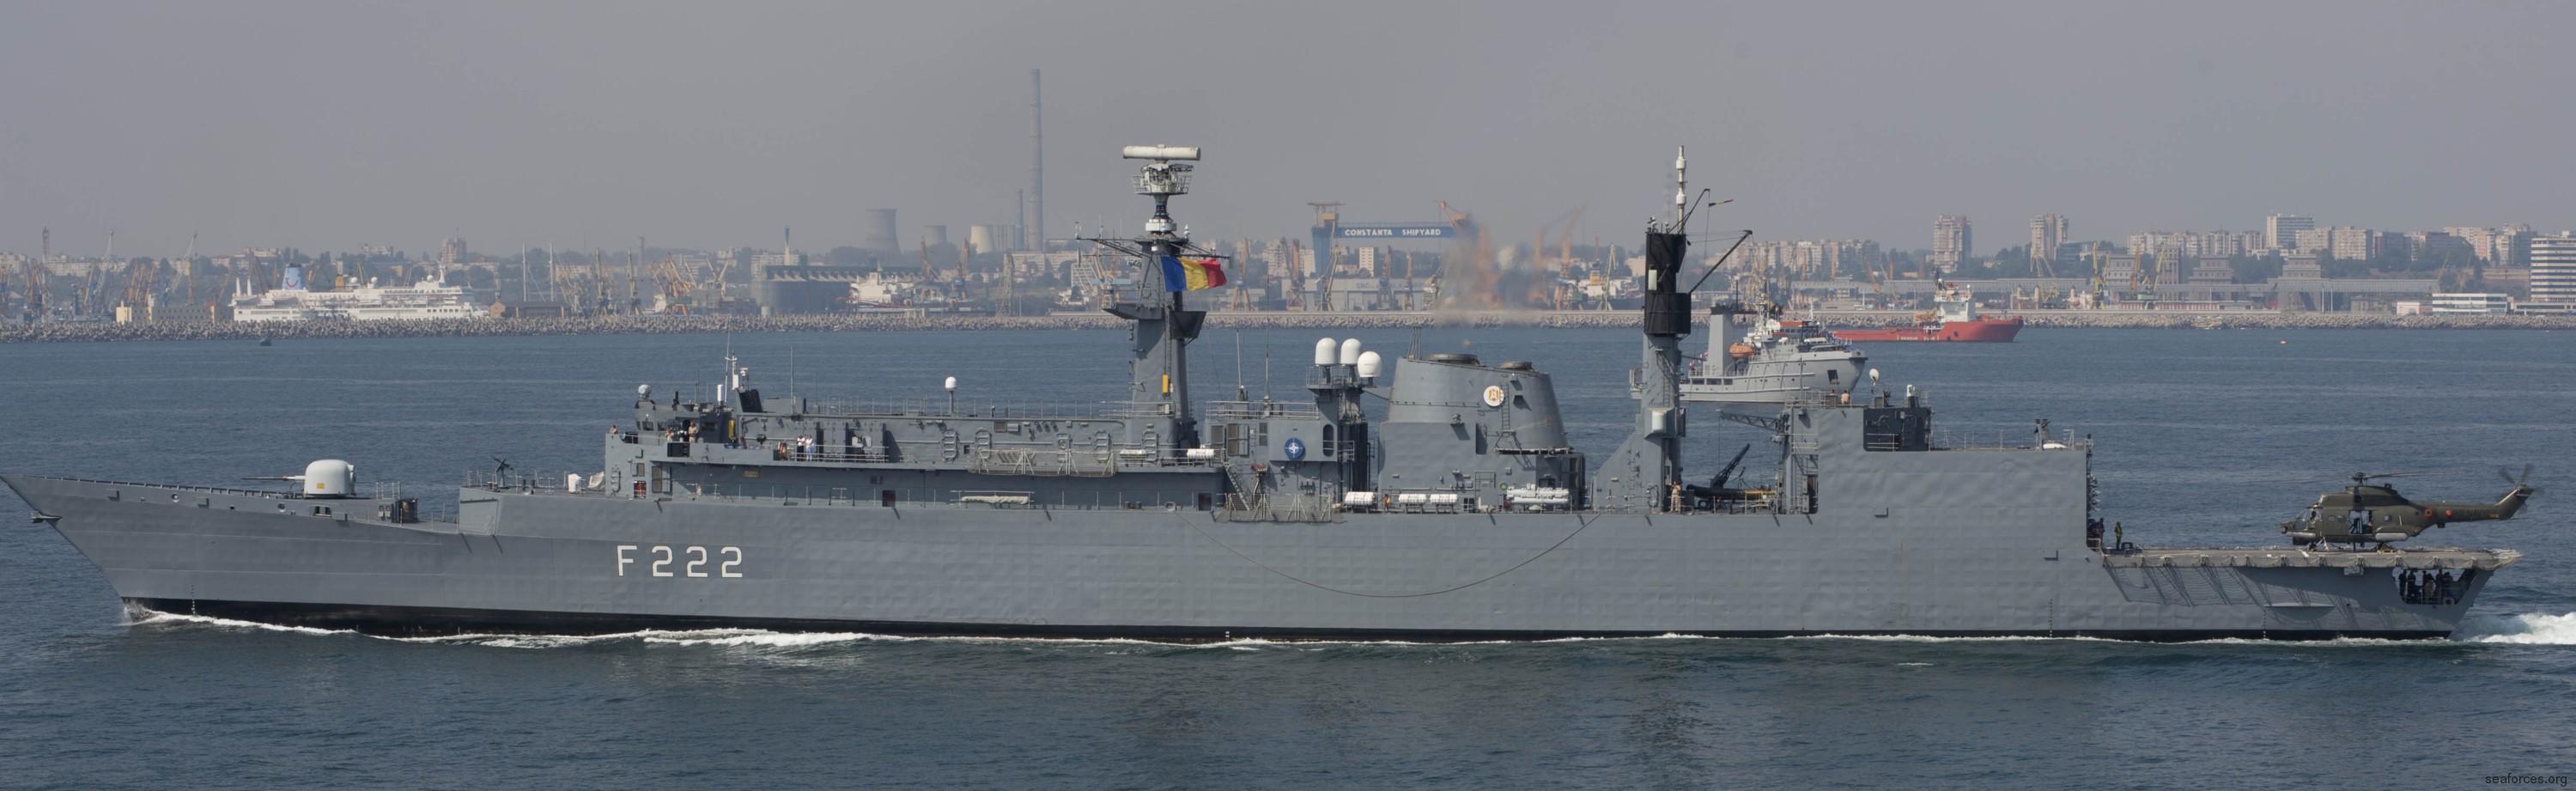 f-222 ros regina maria frigate type 22 broadsword class romanian navy 04